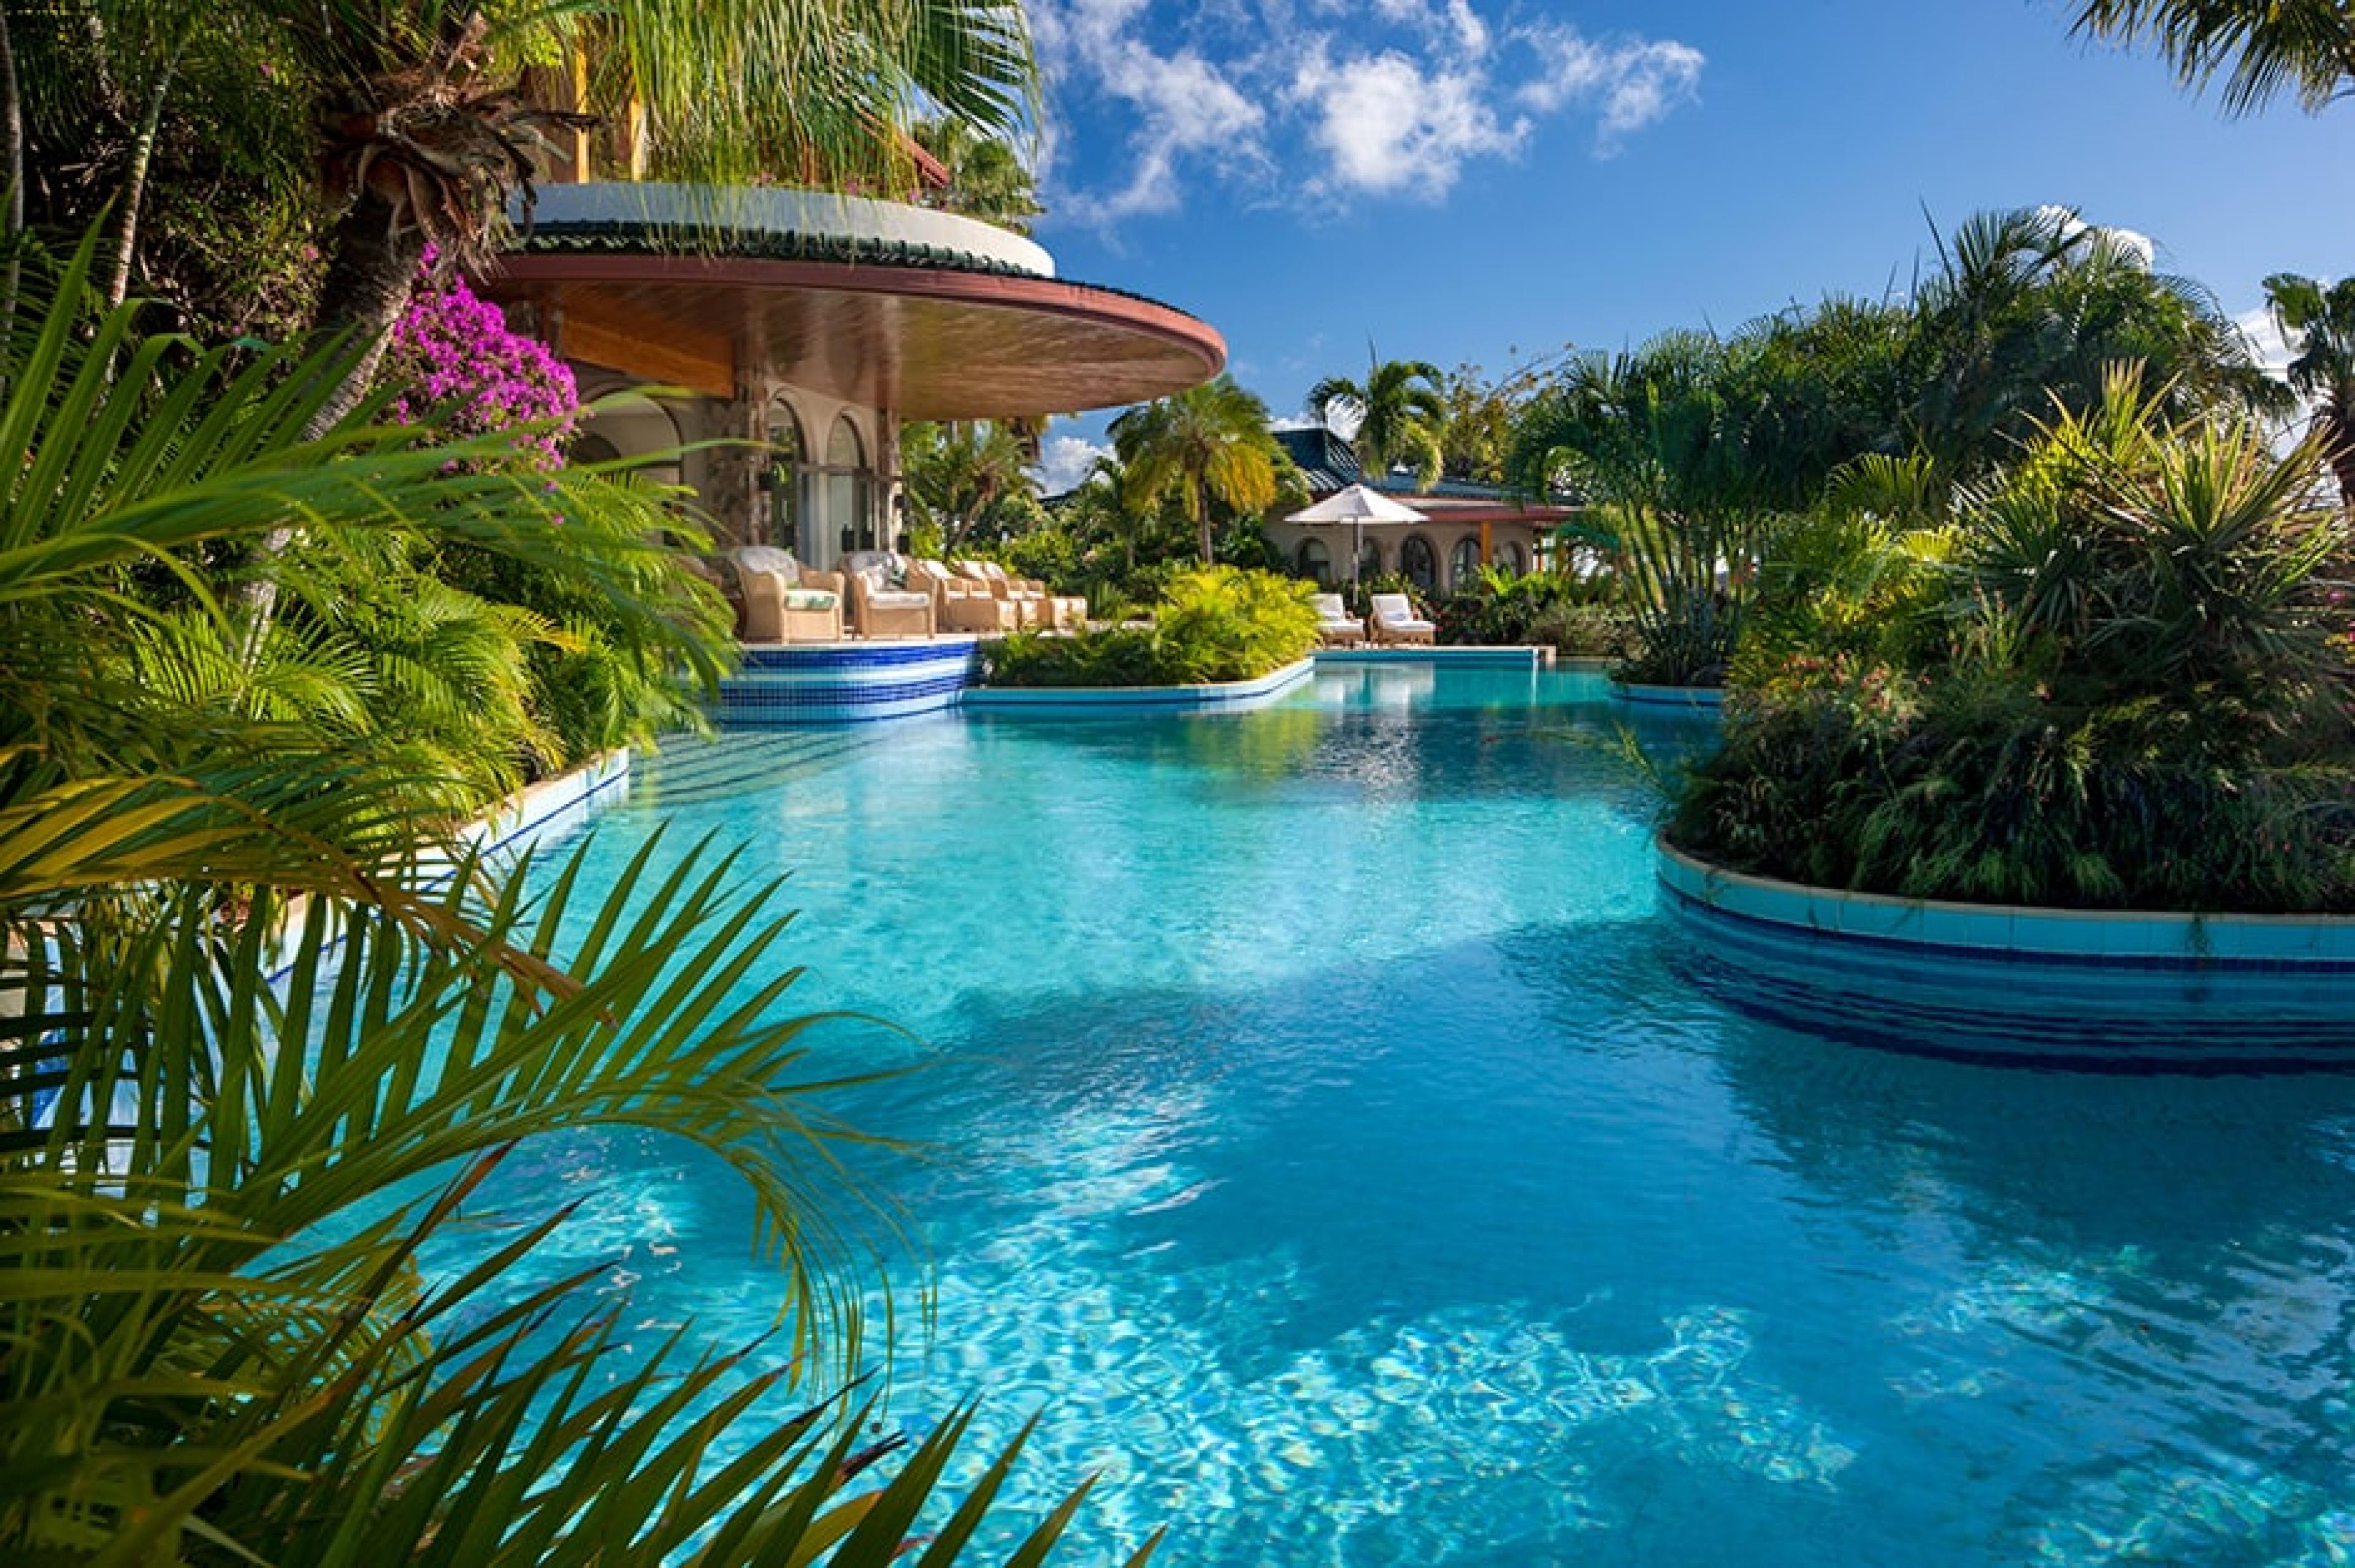 Pool at  Valley Trunk Estate, British Virgin Islands, Caribbean